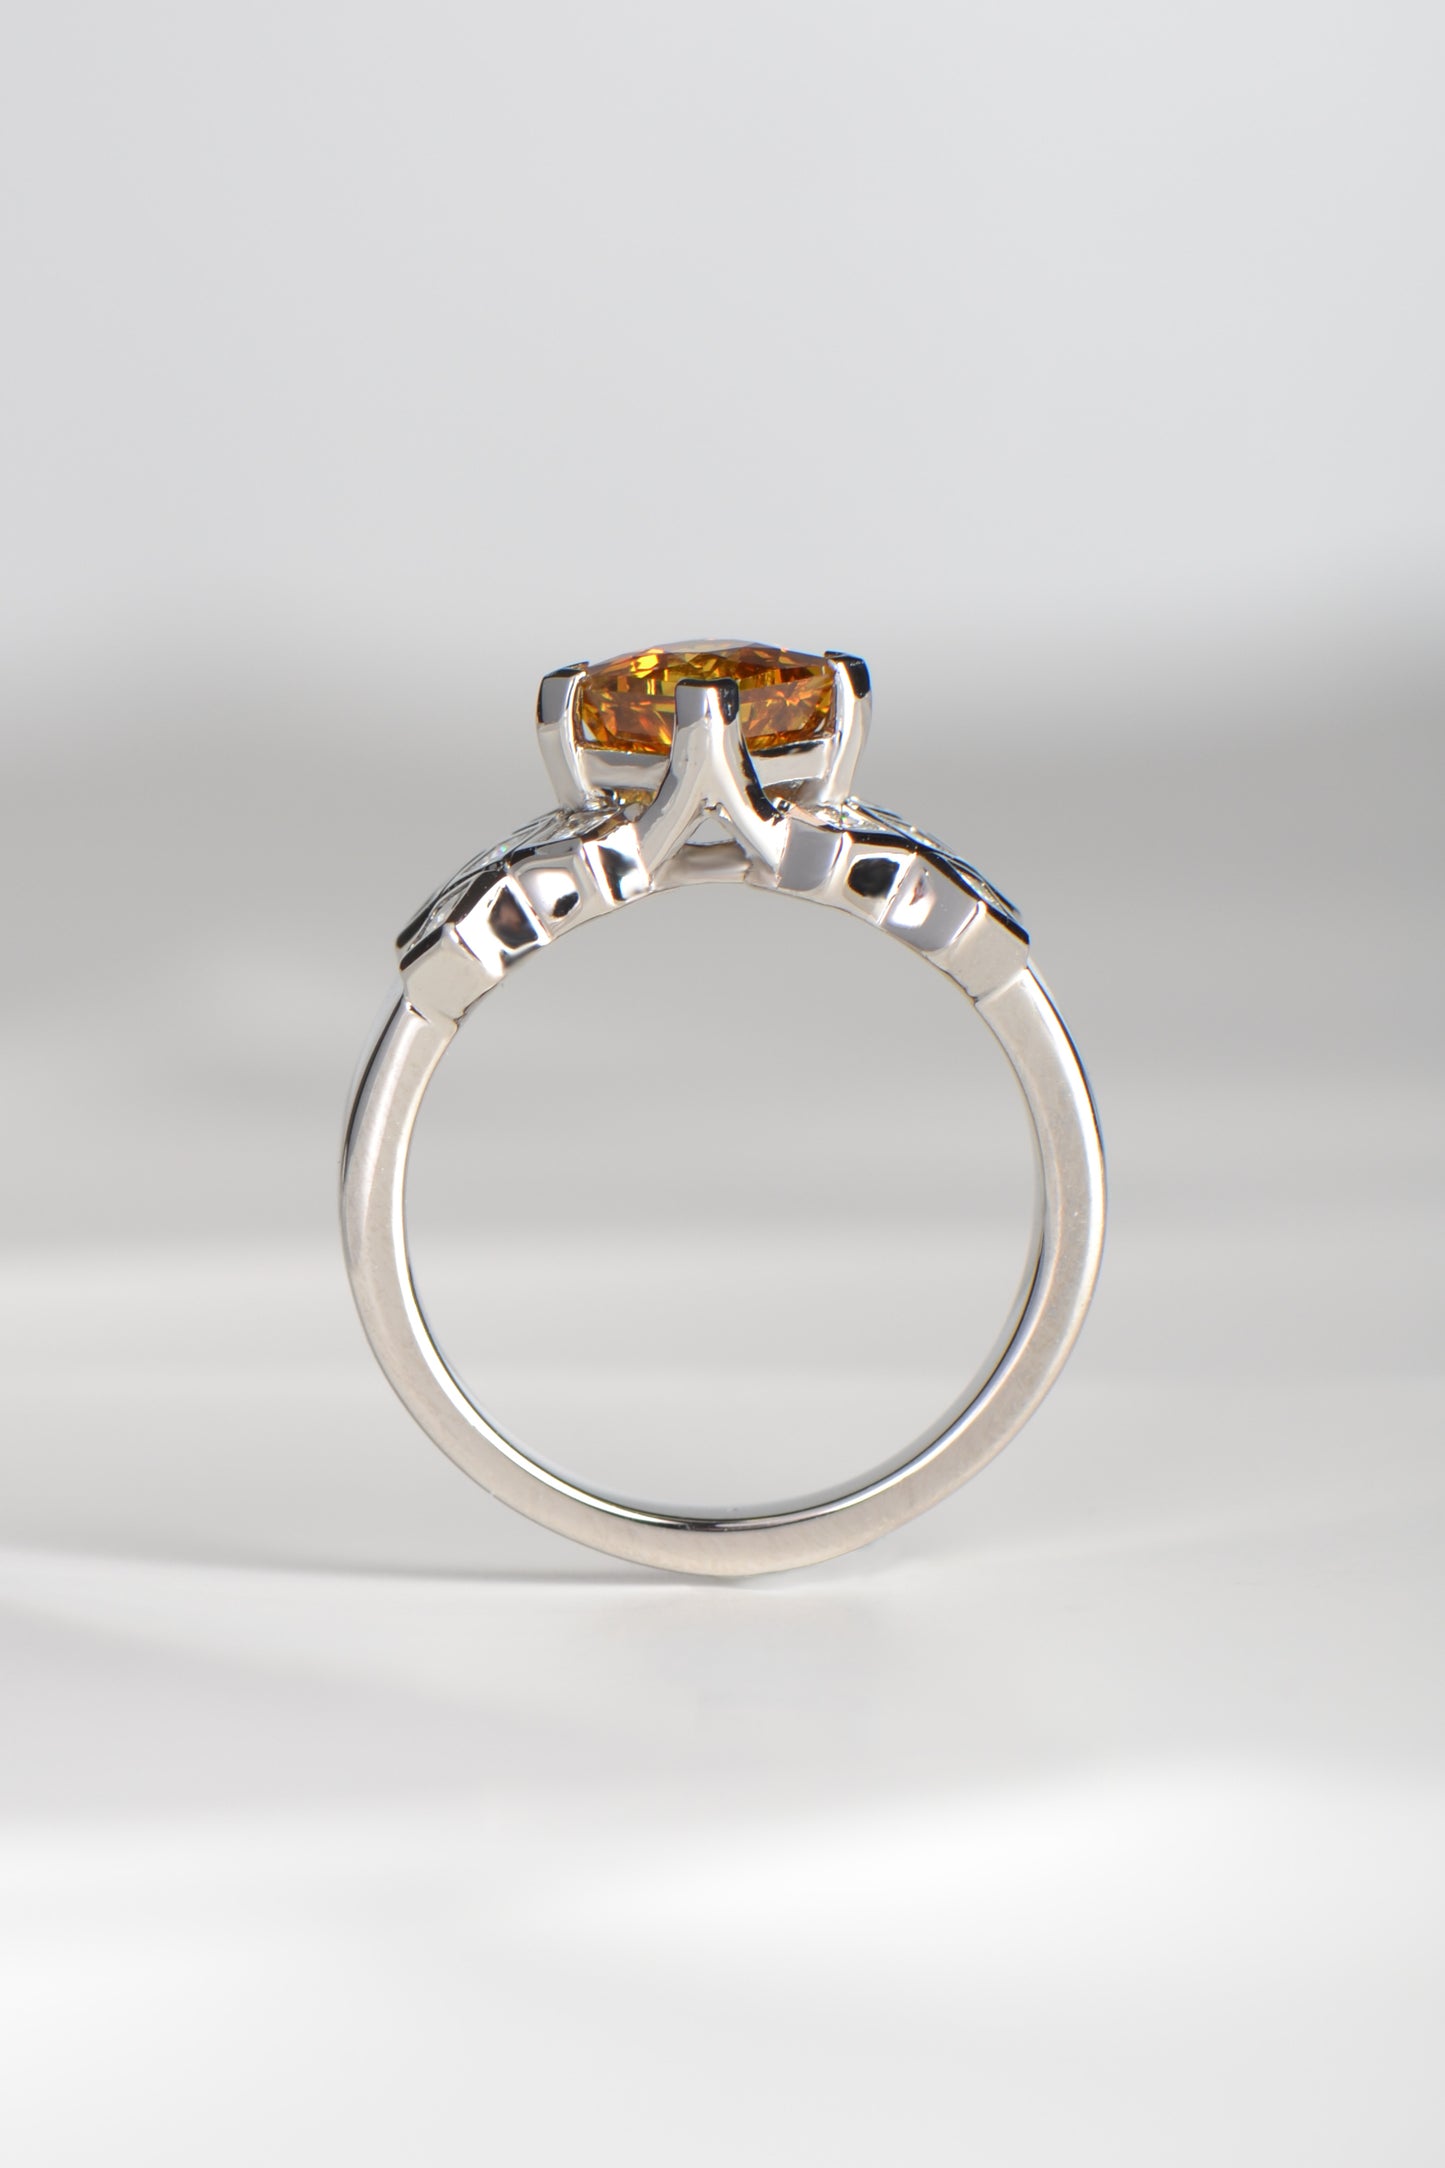 Orange sapphire and diamond Tartan ring